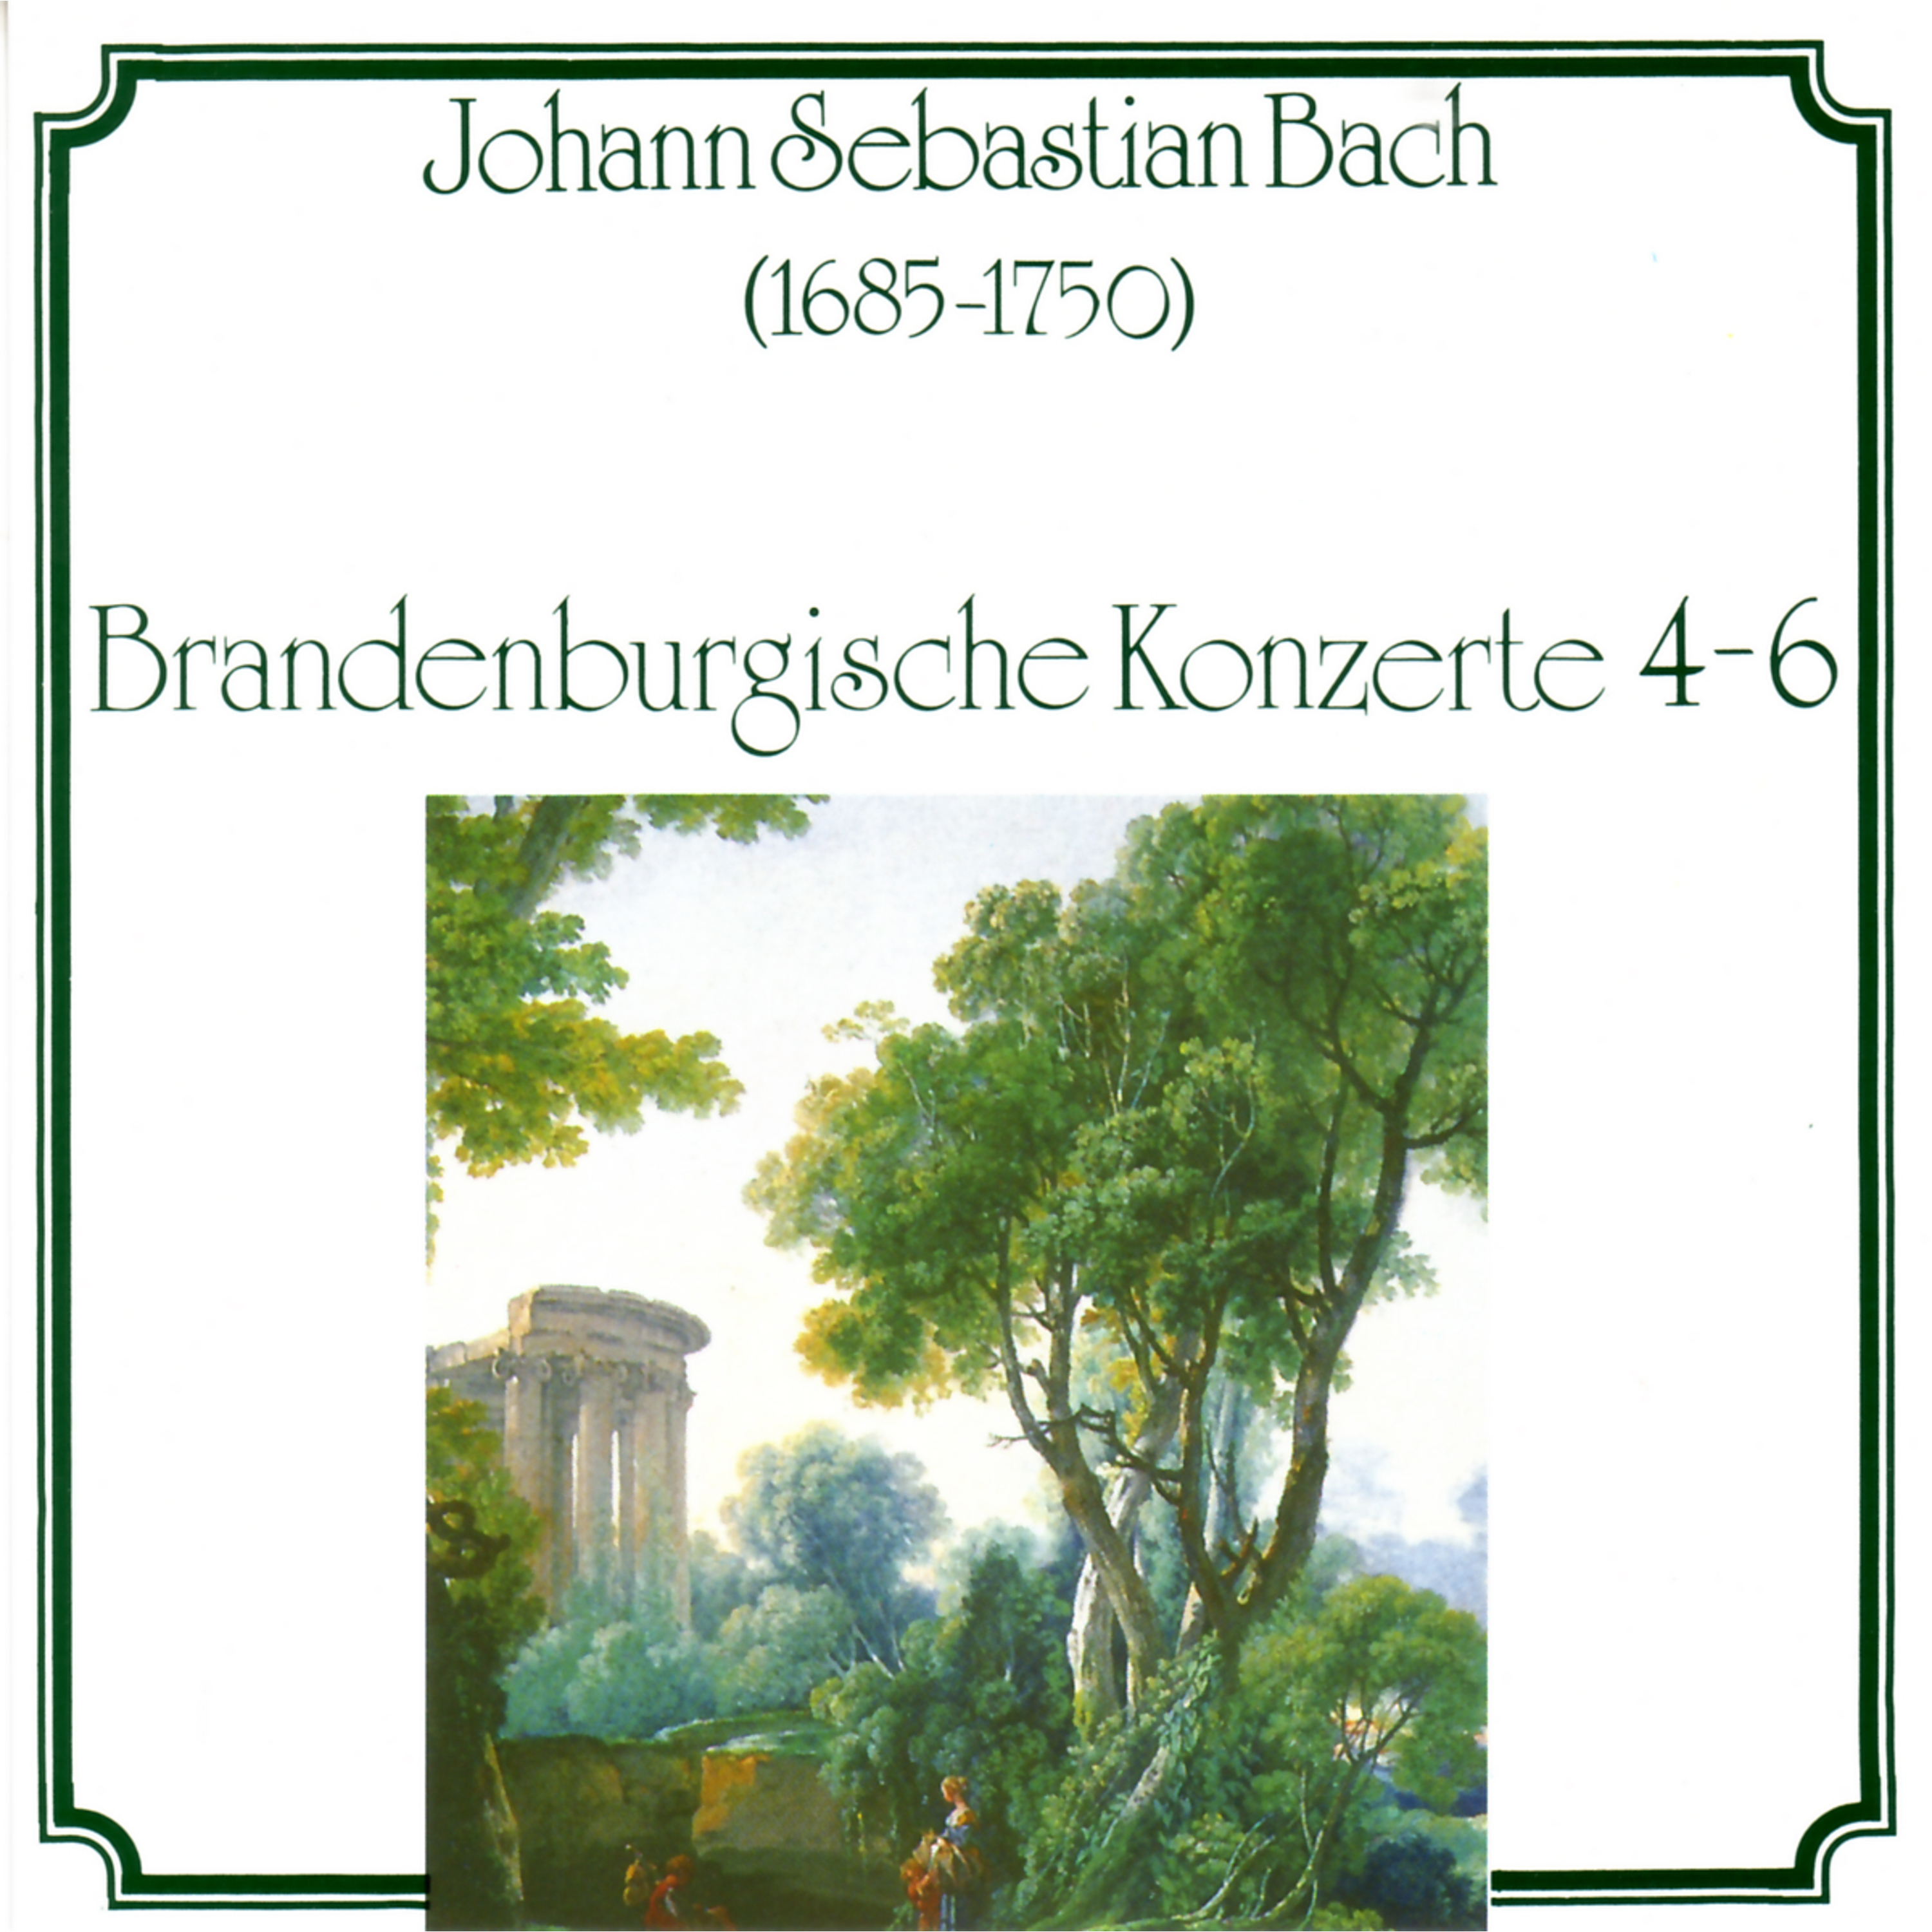 Brandenburgisches Konzert No. 6 in B Major, BWV 1051: Adagio ma non tanto